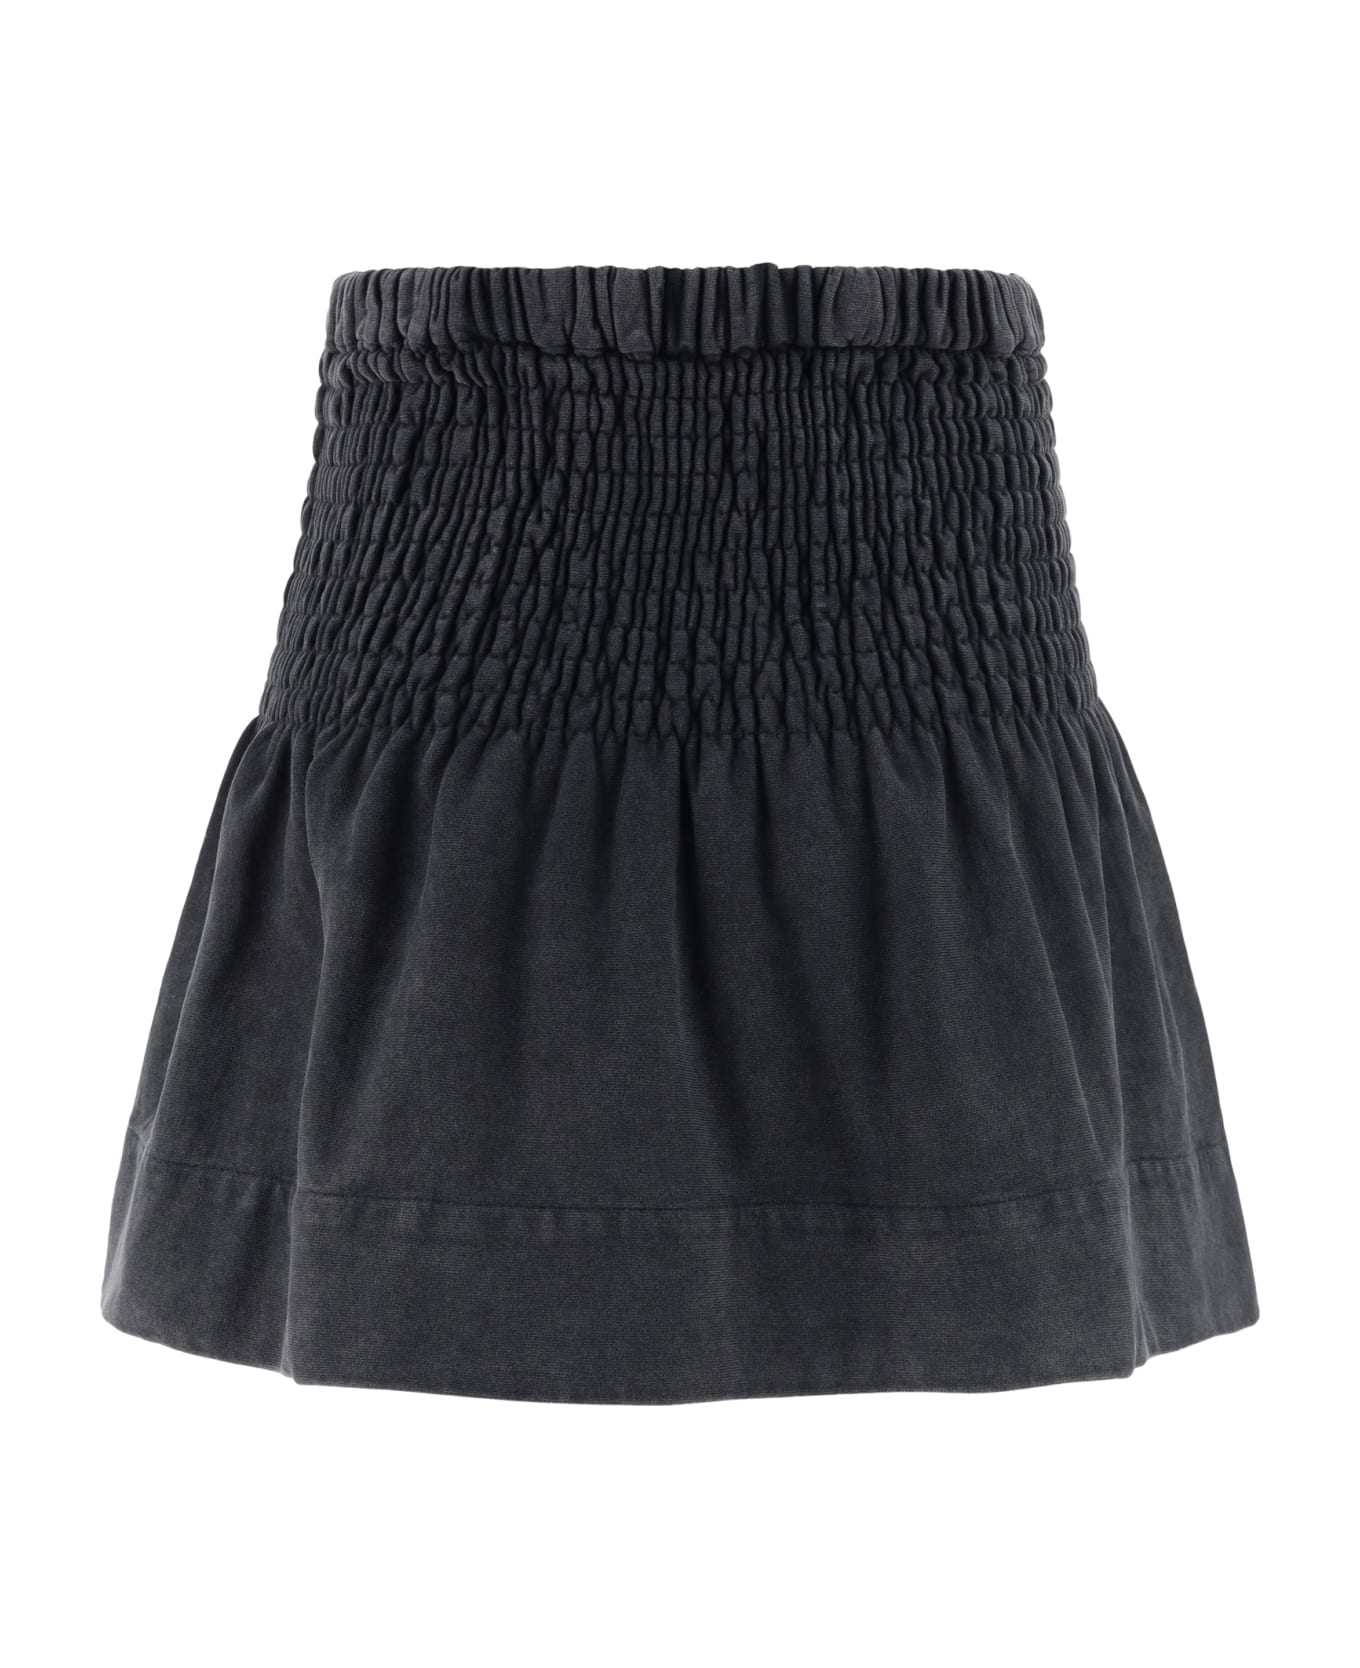 Marant Étoile Pacifica Mini Skirt - Faded Black